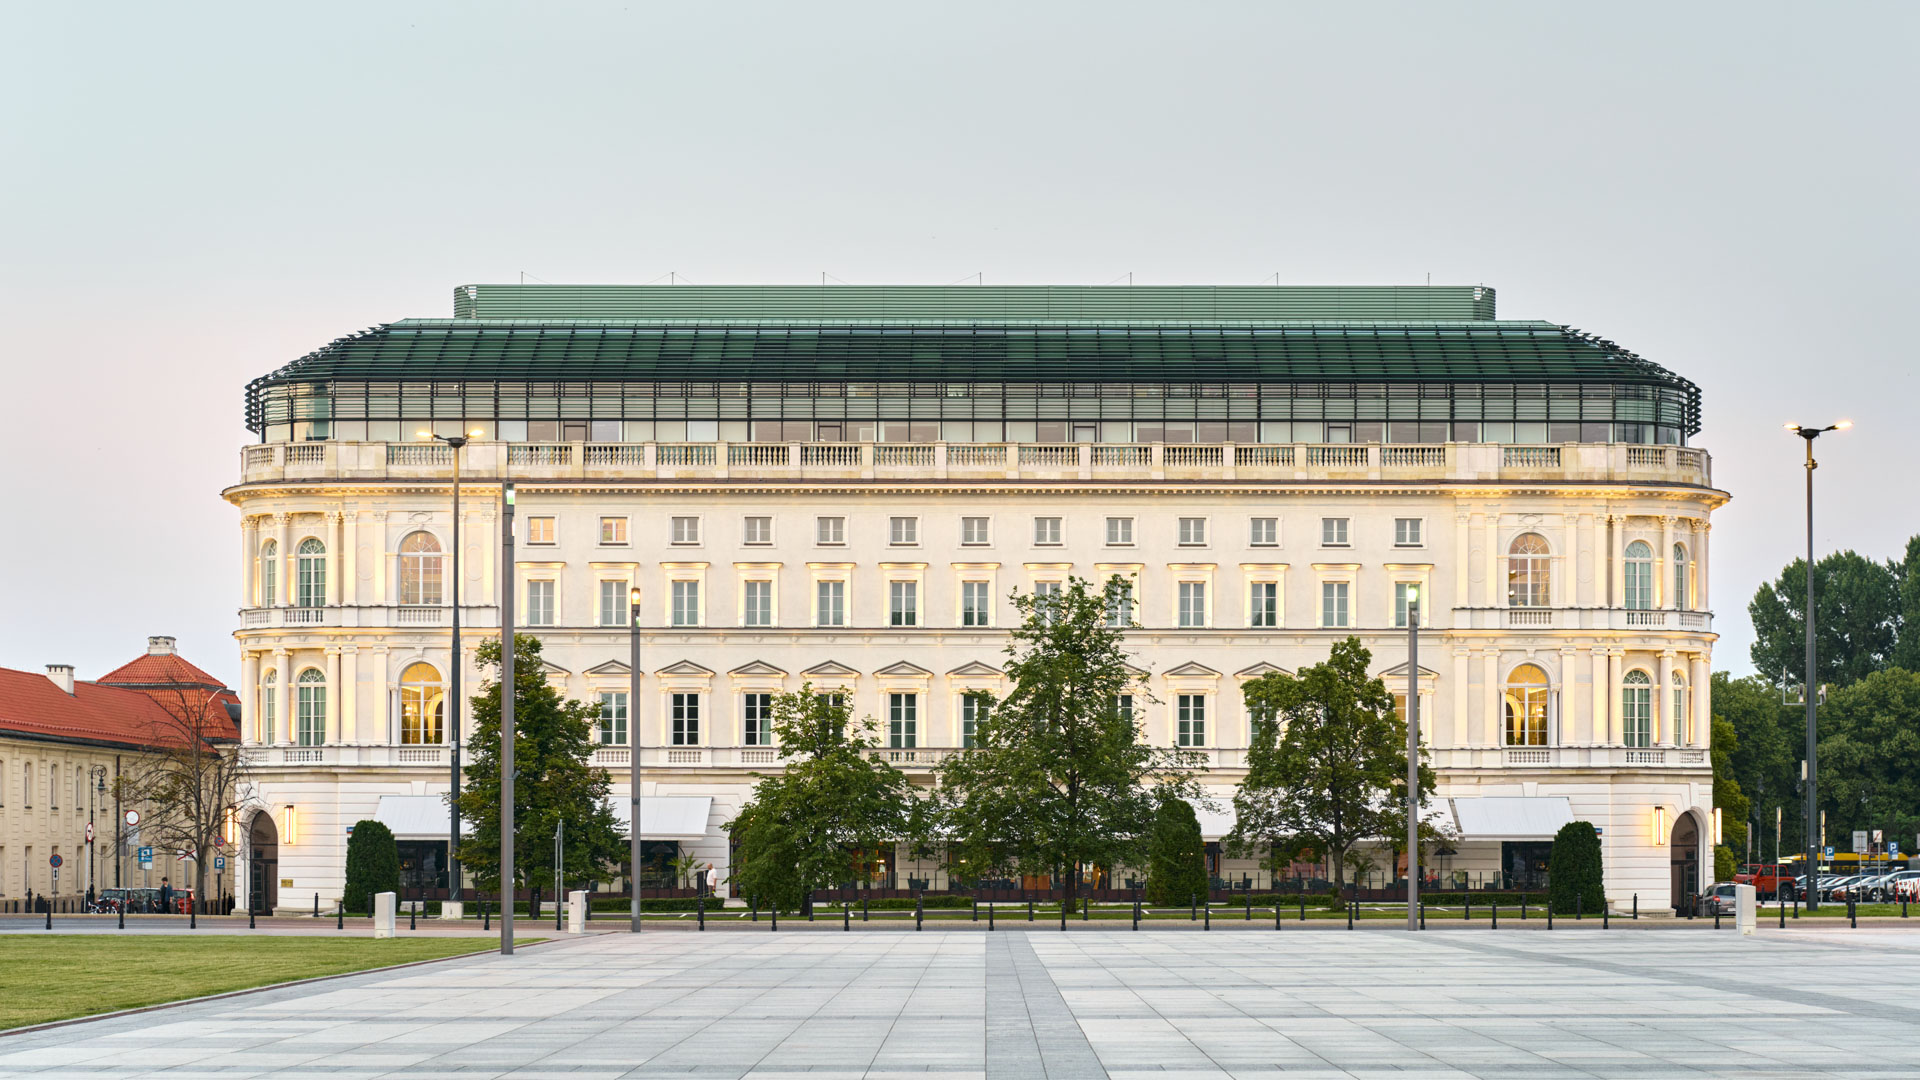 Europejski Hotel, view from Piłsudski Square